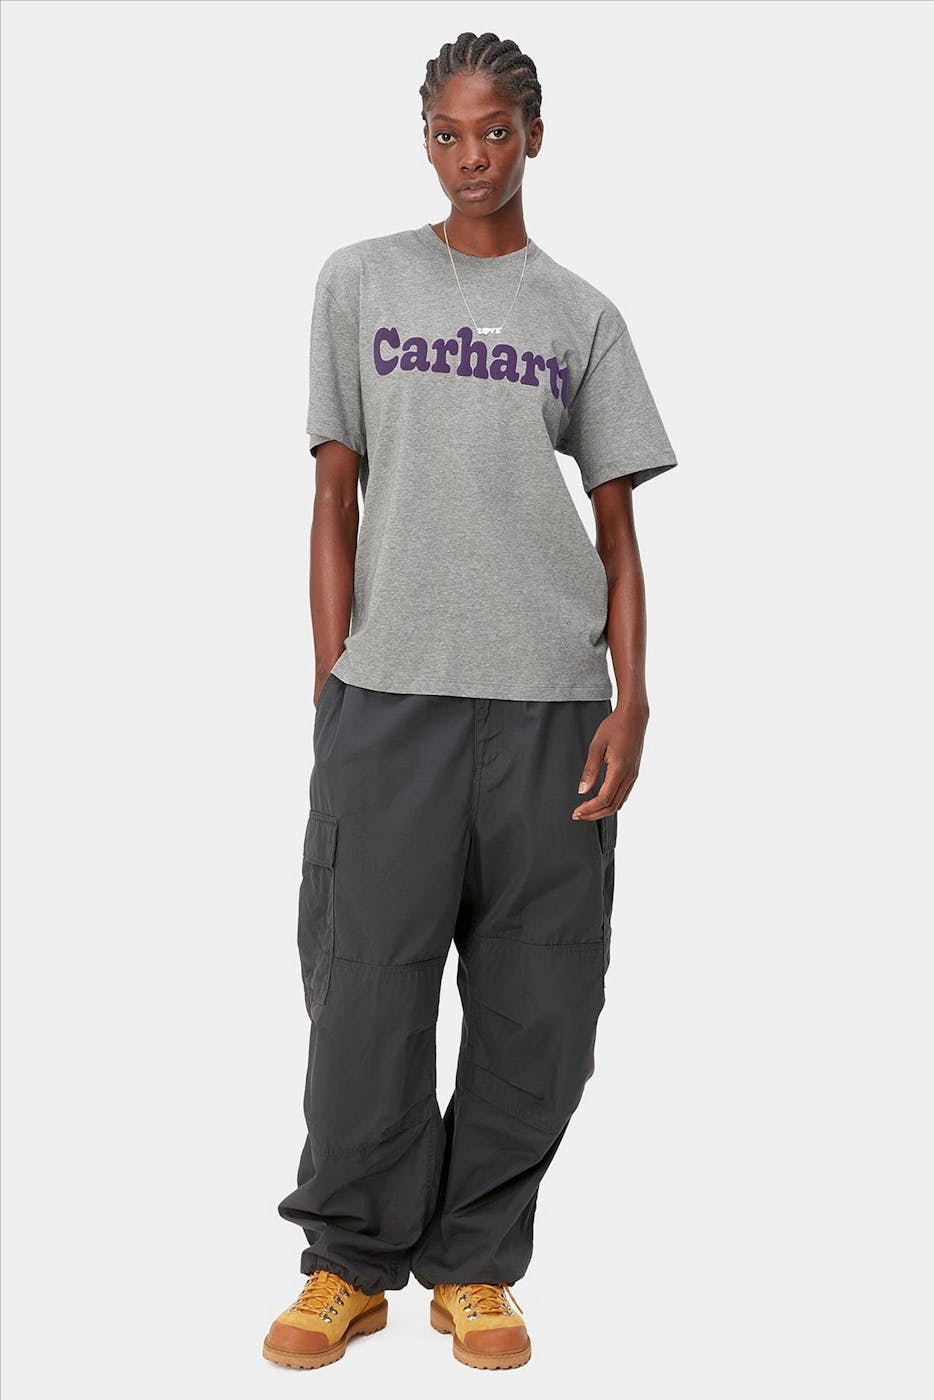 Carhartt WIP - Grijze Bubbles T-shirt